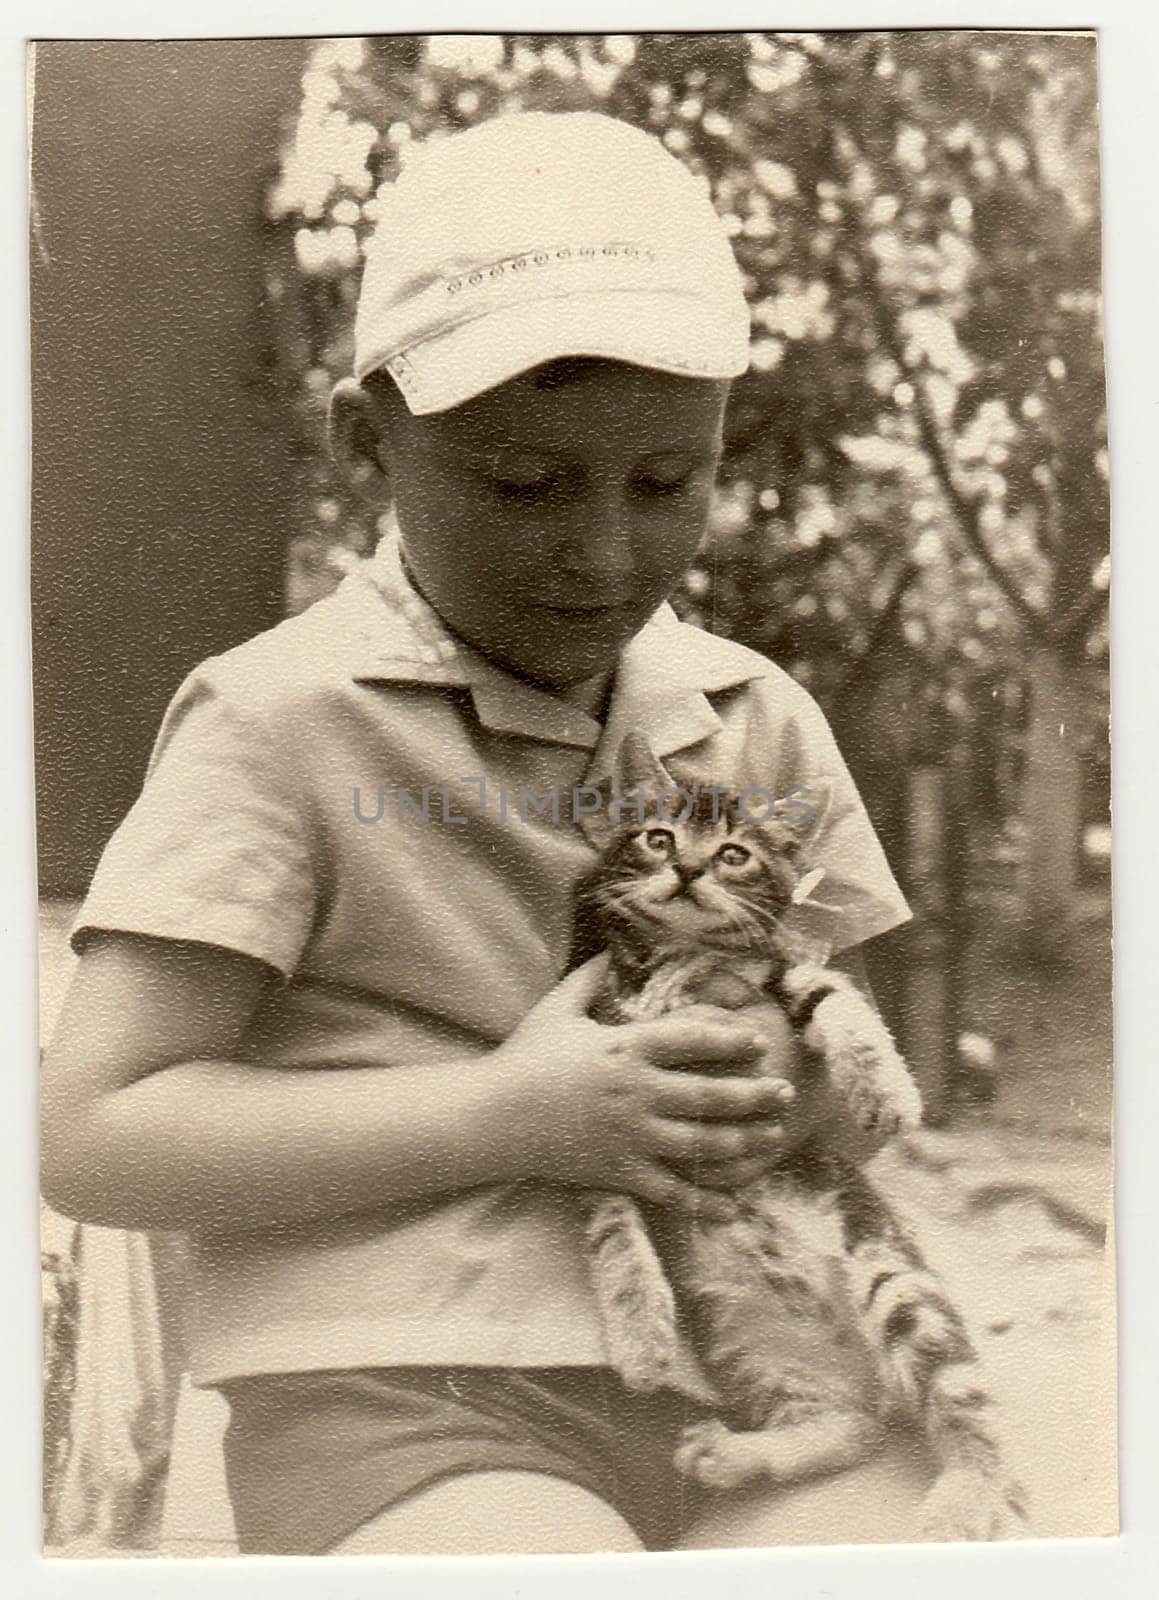 USSR - 1969: Vintage photo shows boy strokes cat.